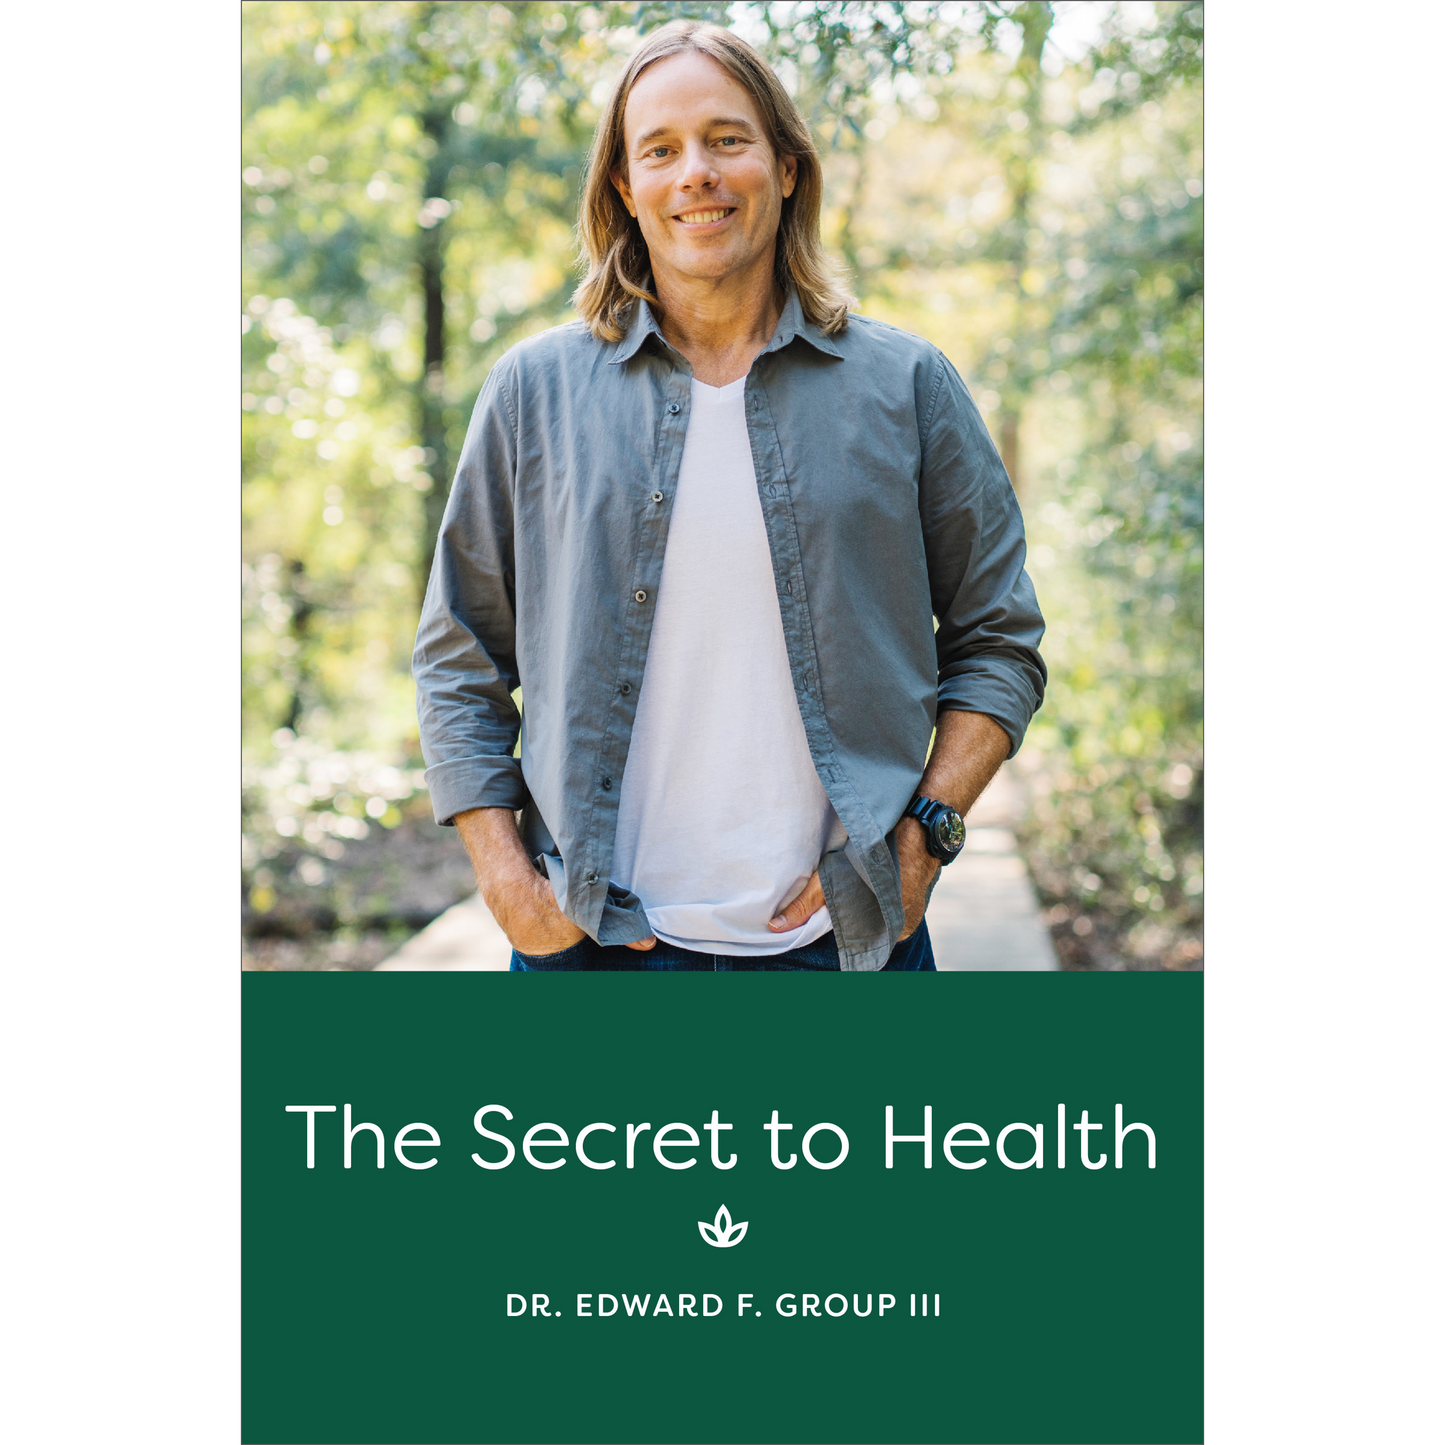 The Secret to Health